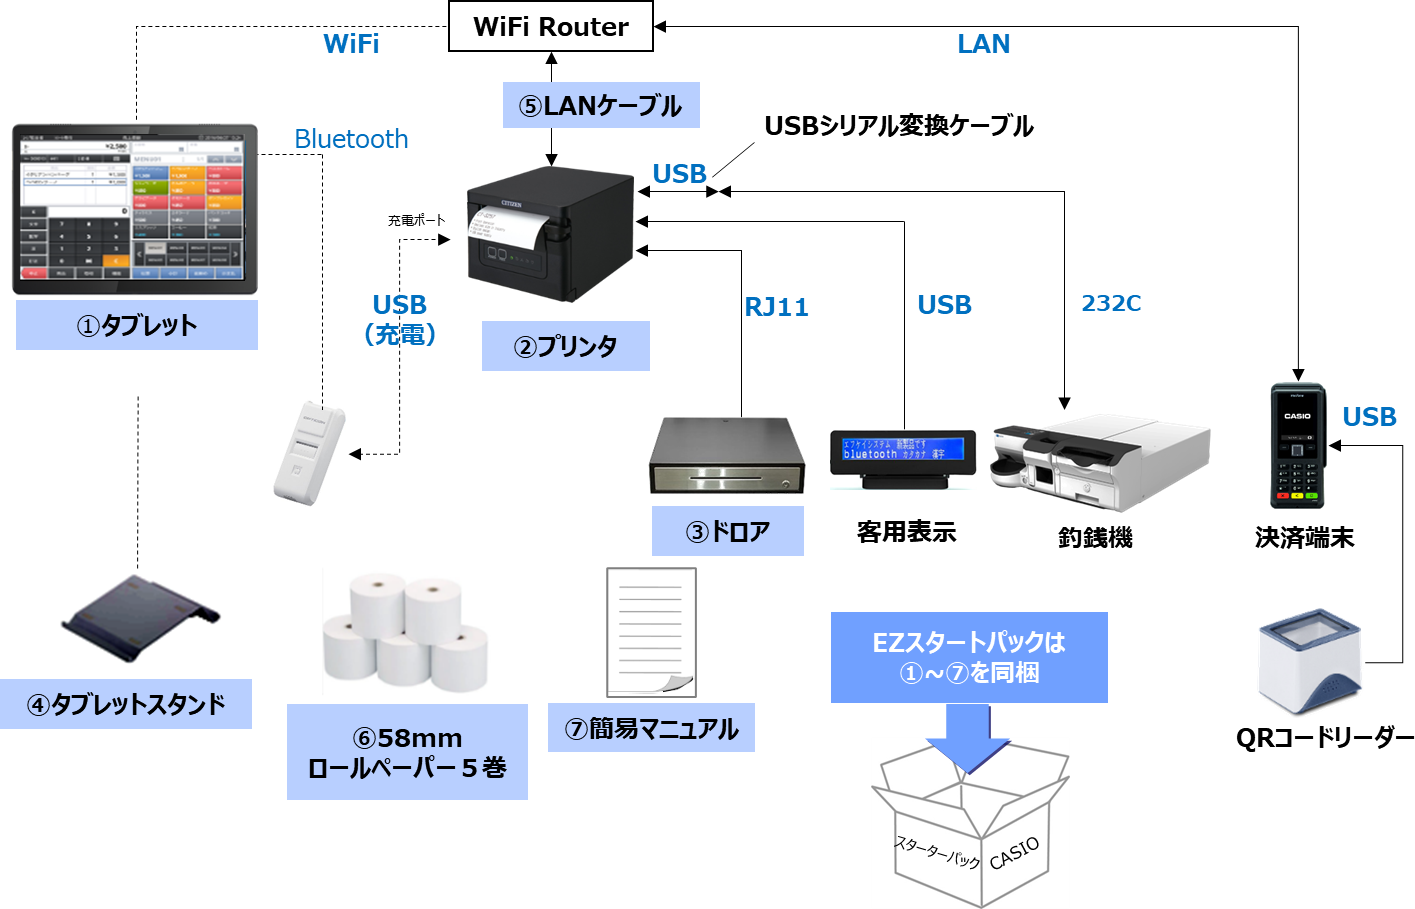 EZネットレジのシステム構成